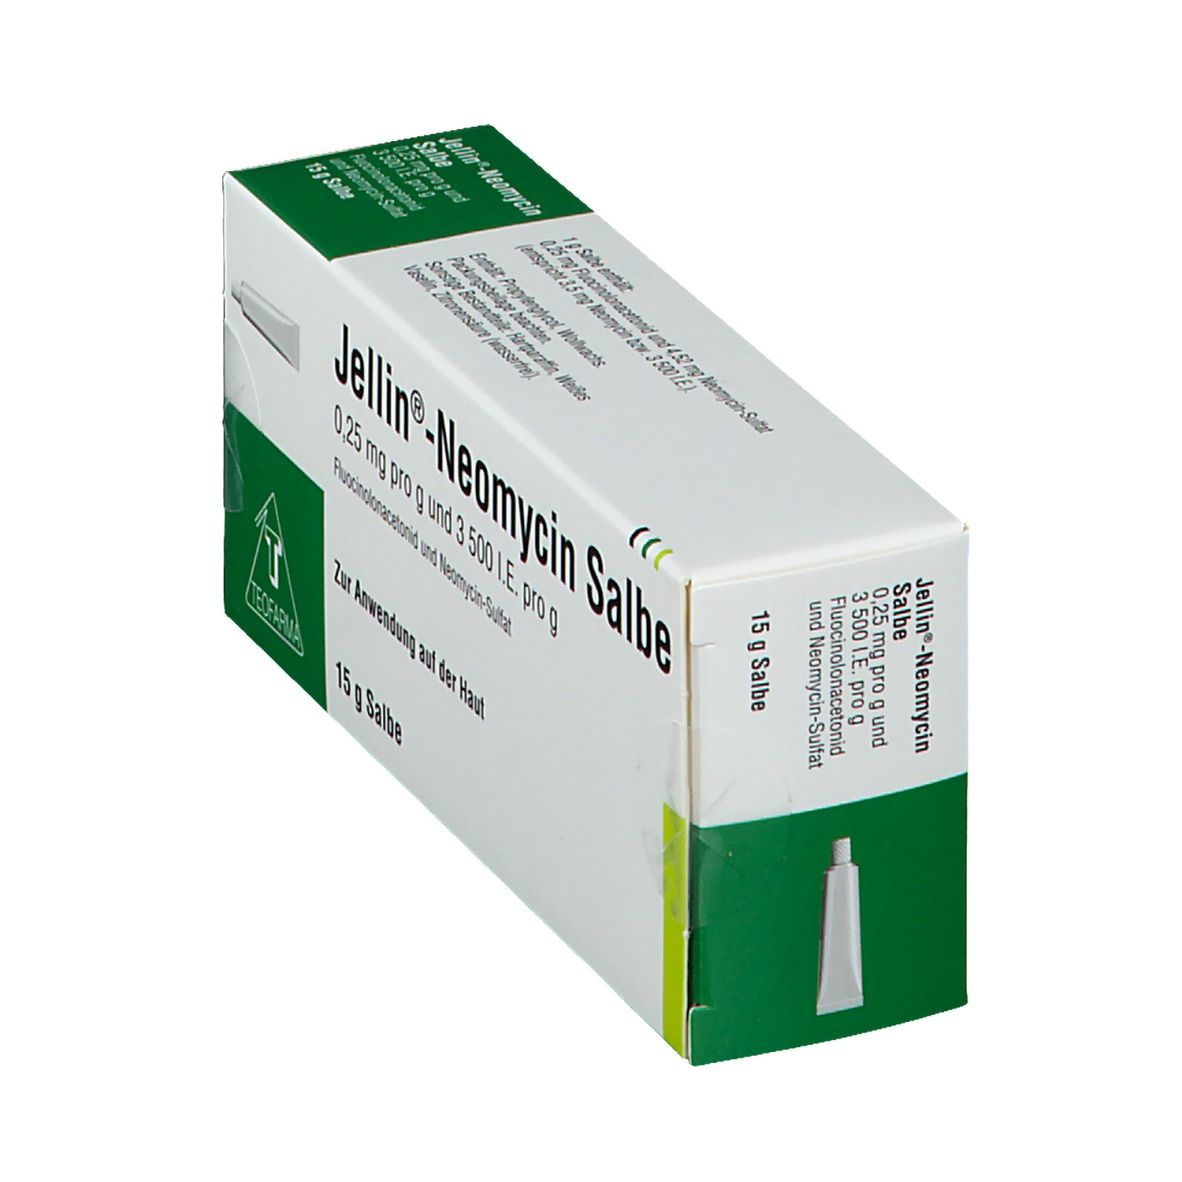 Jellin®-Neomycin Salbe 0,25 mg/g und 3500 I.E./g